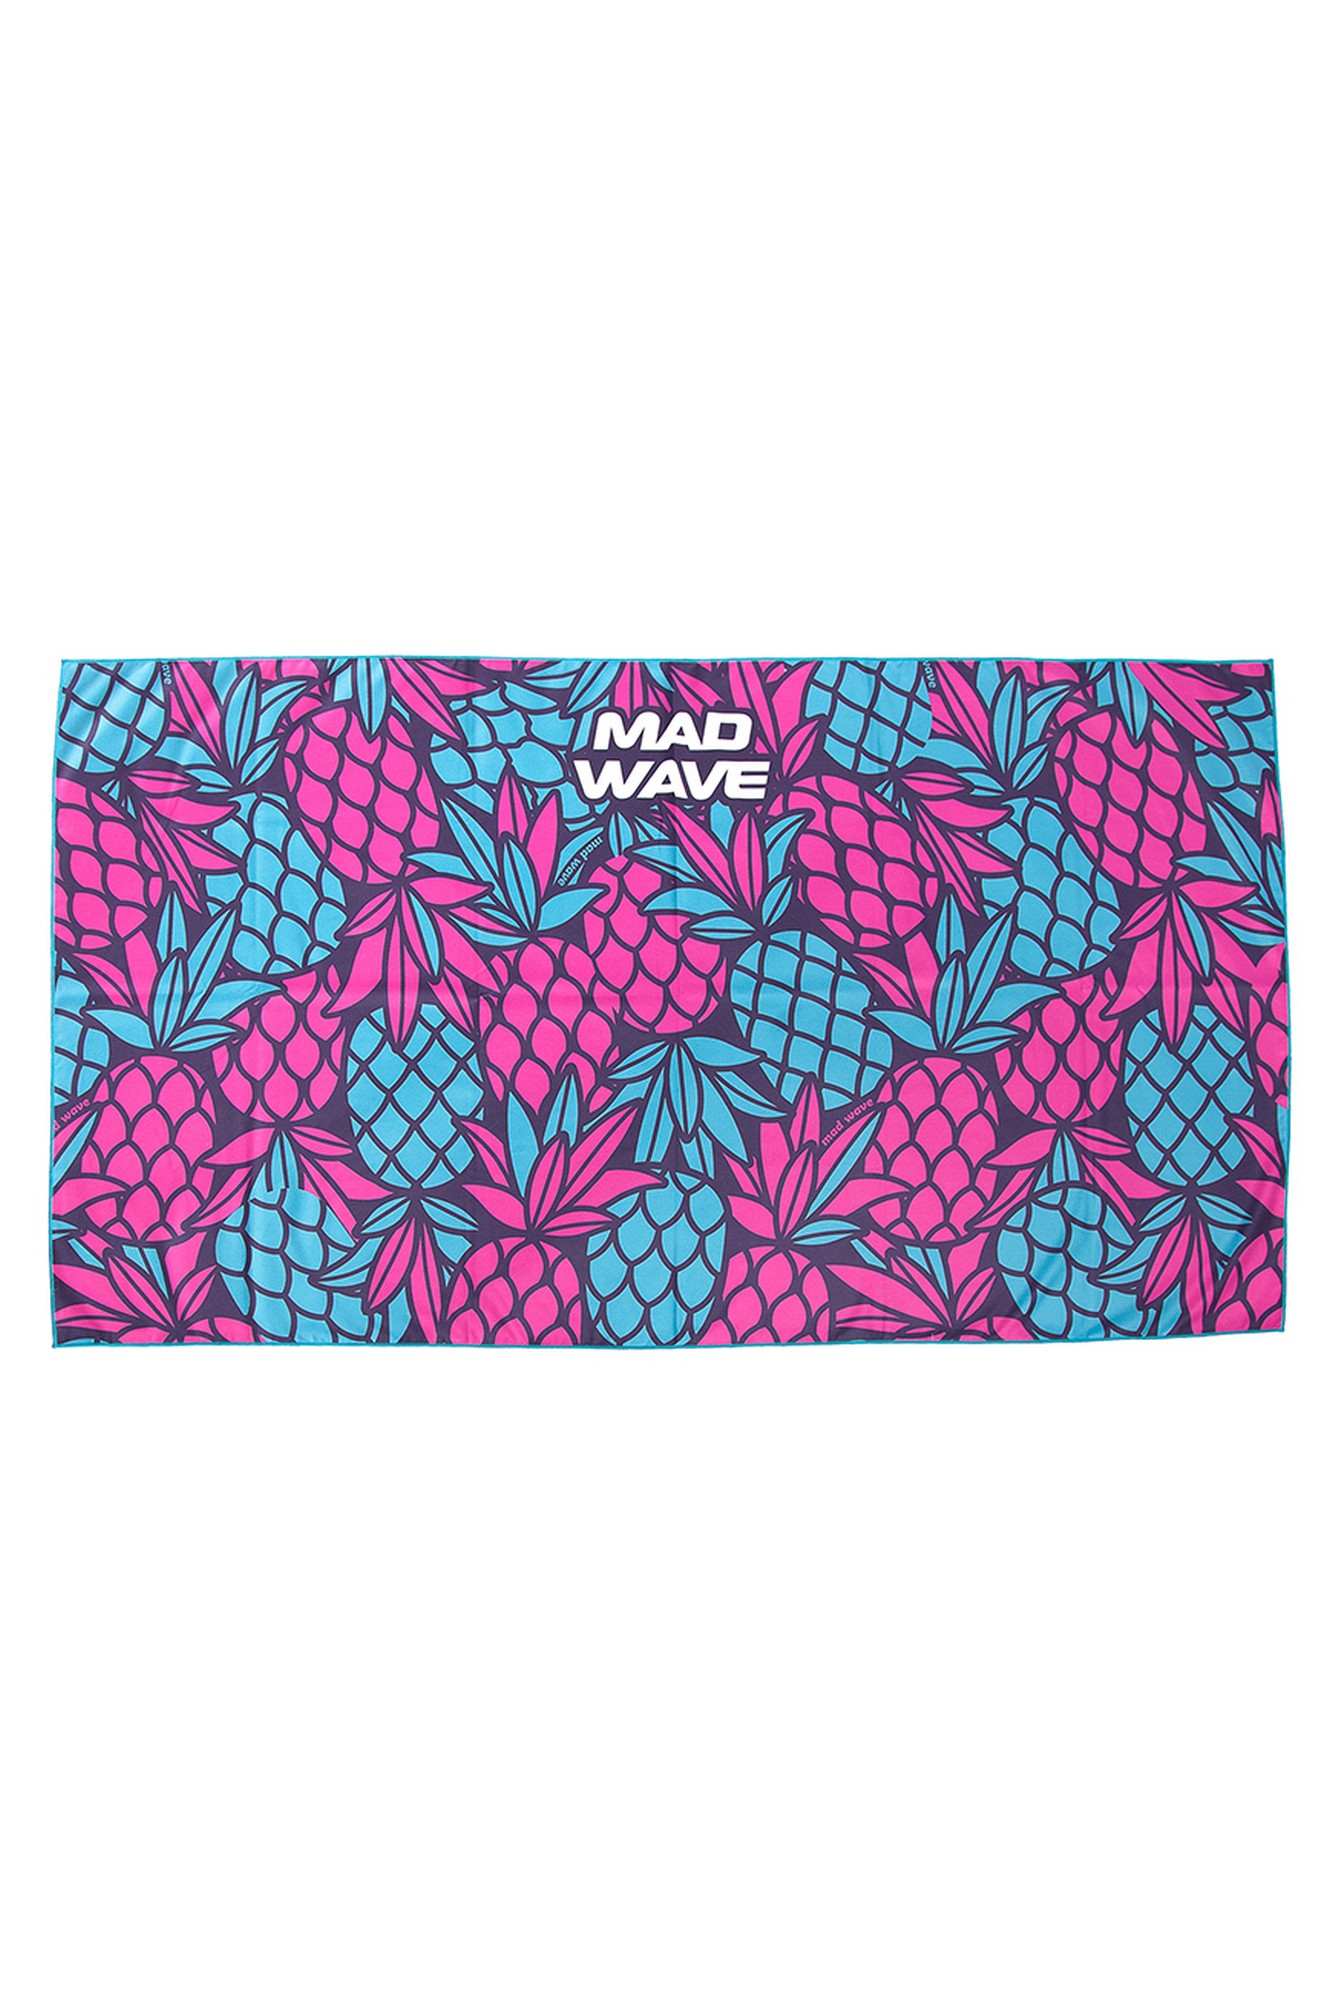    Mad Wave Microfiber Towel Pineapple M0761 08 2 11W 